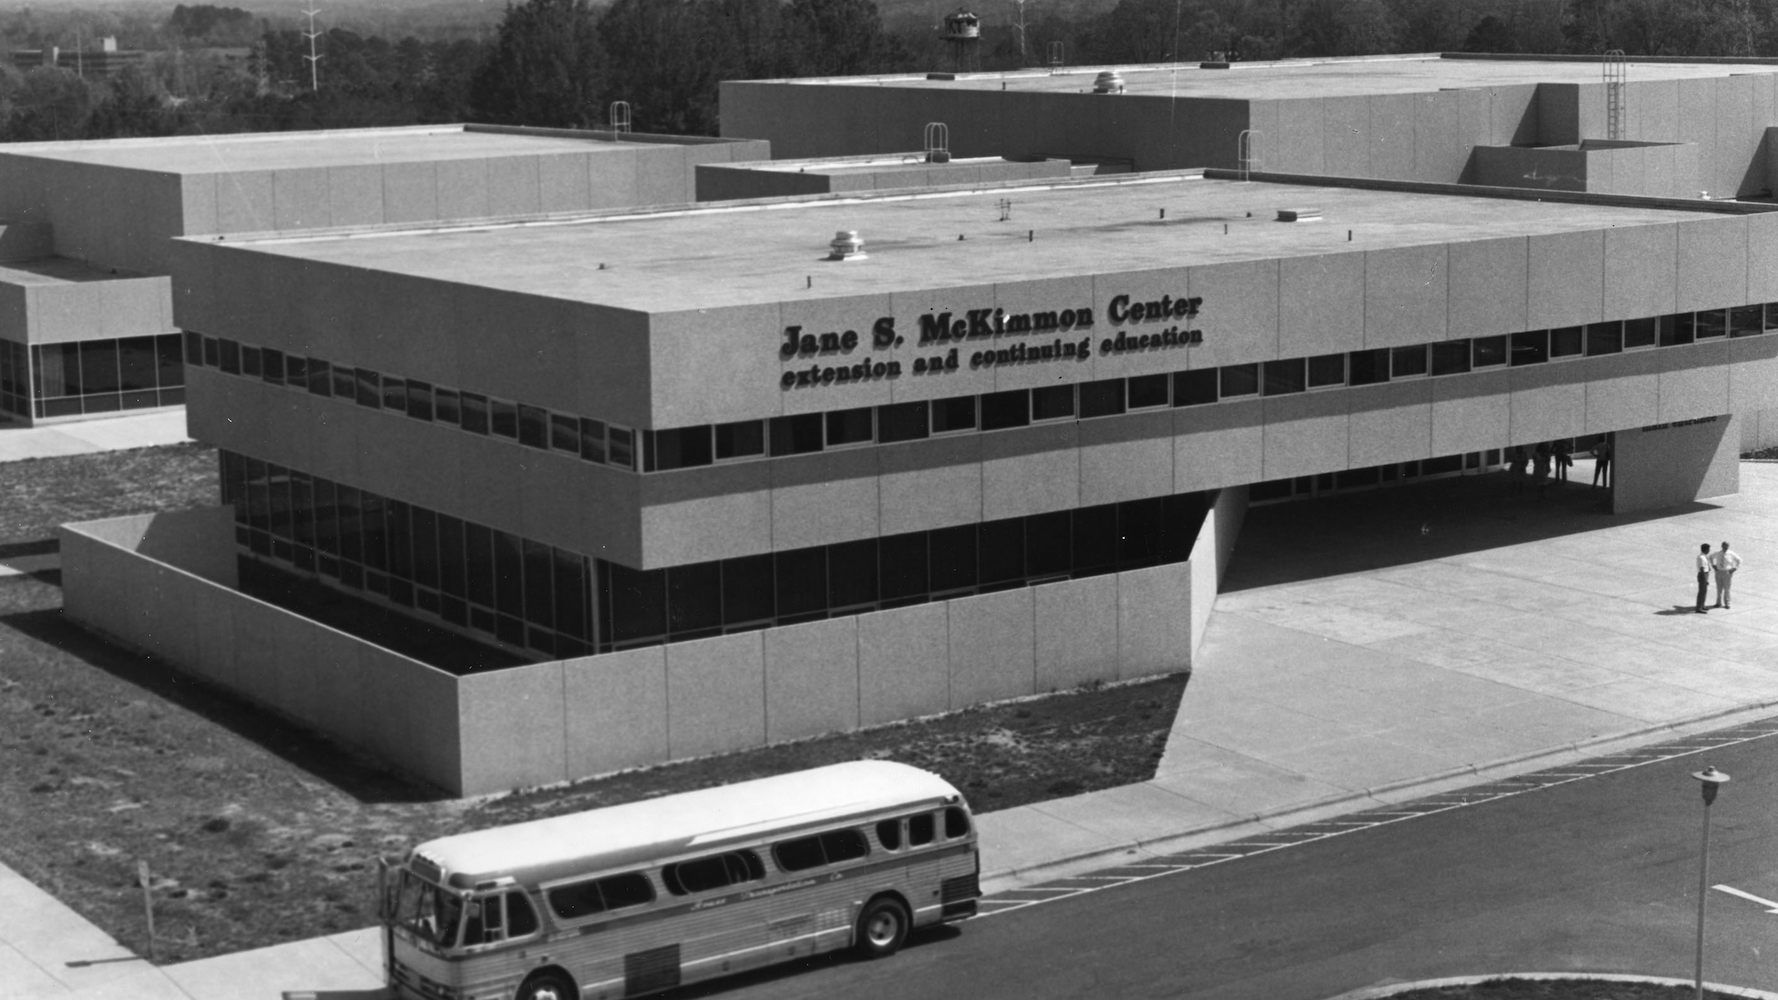 The McKimmon Center